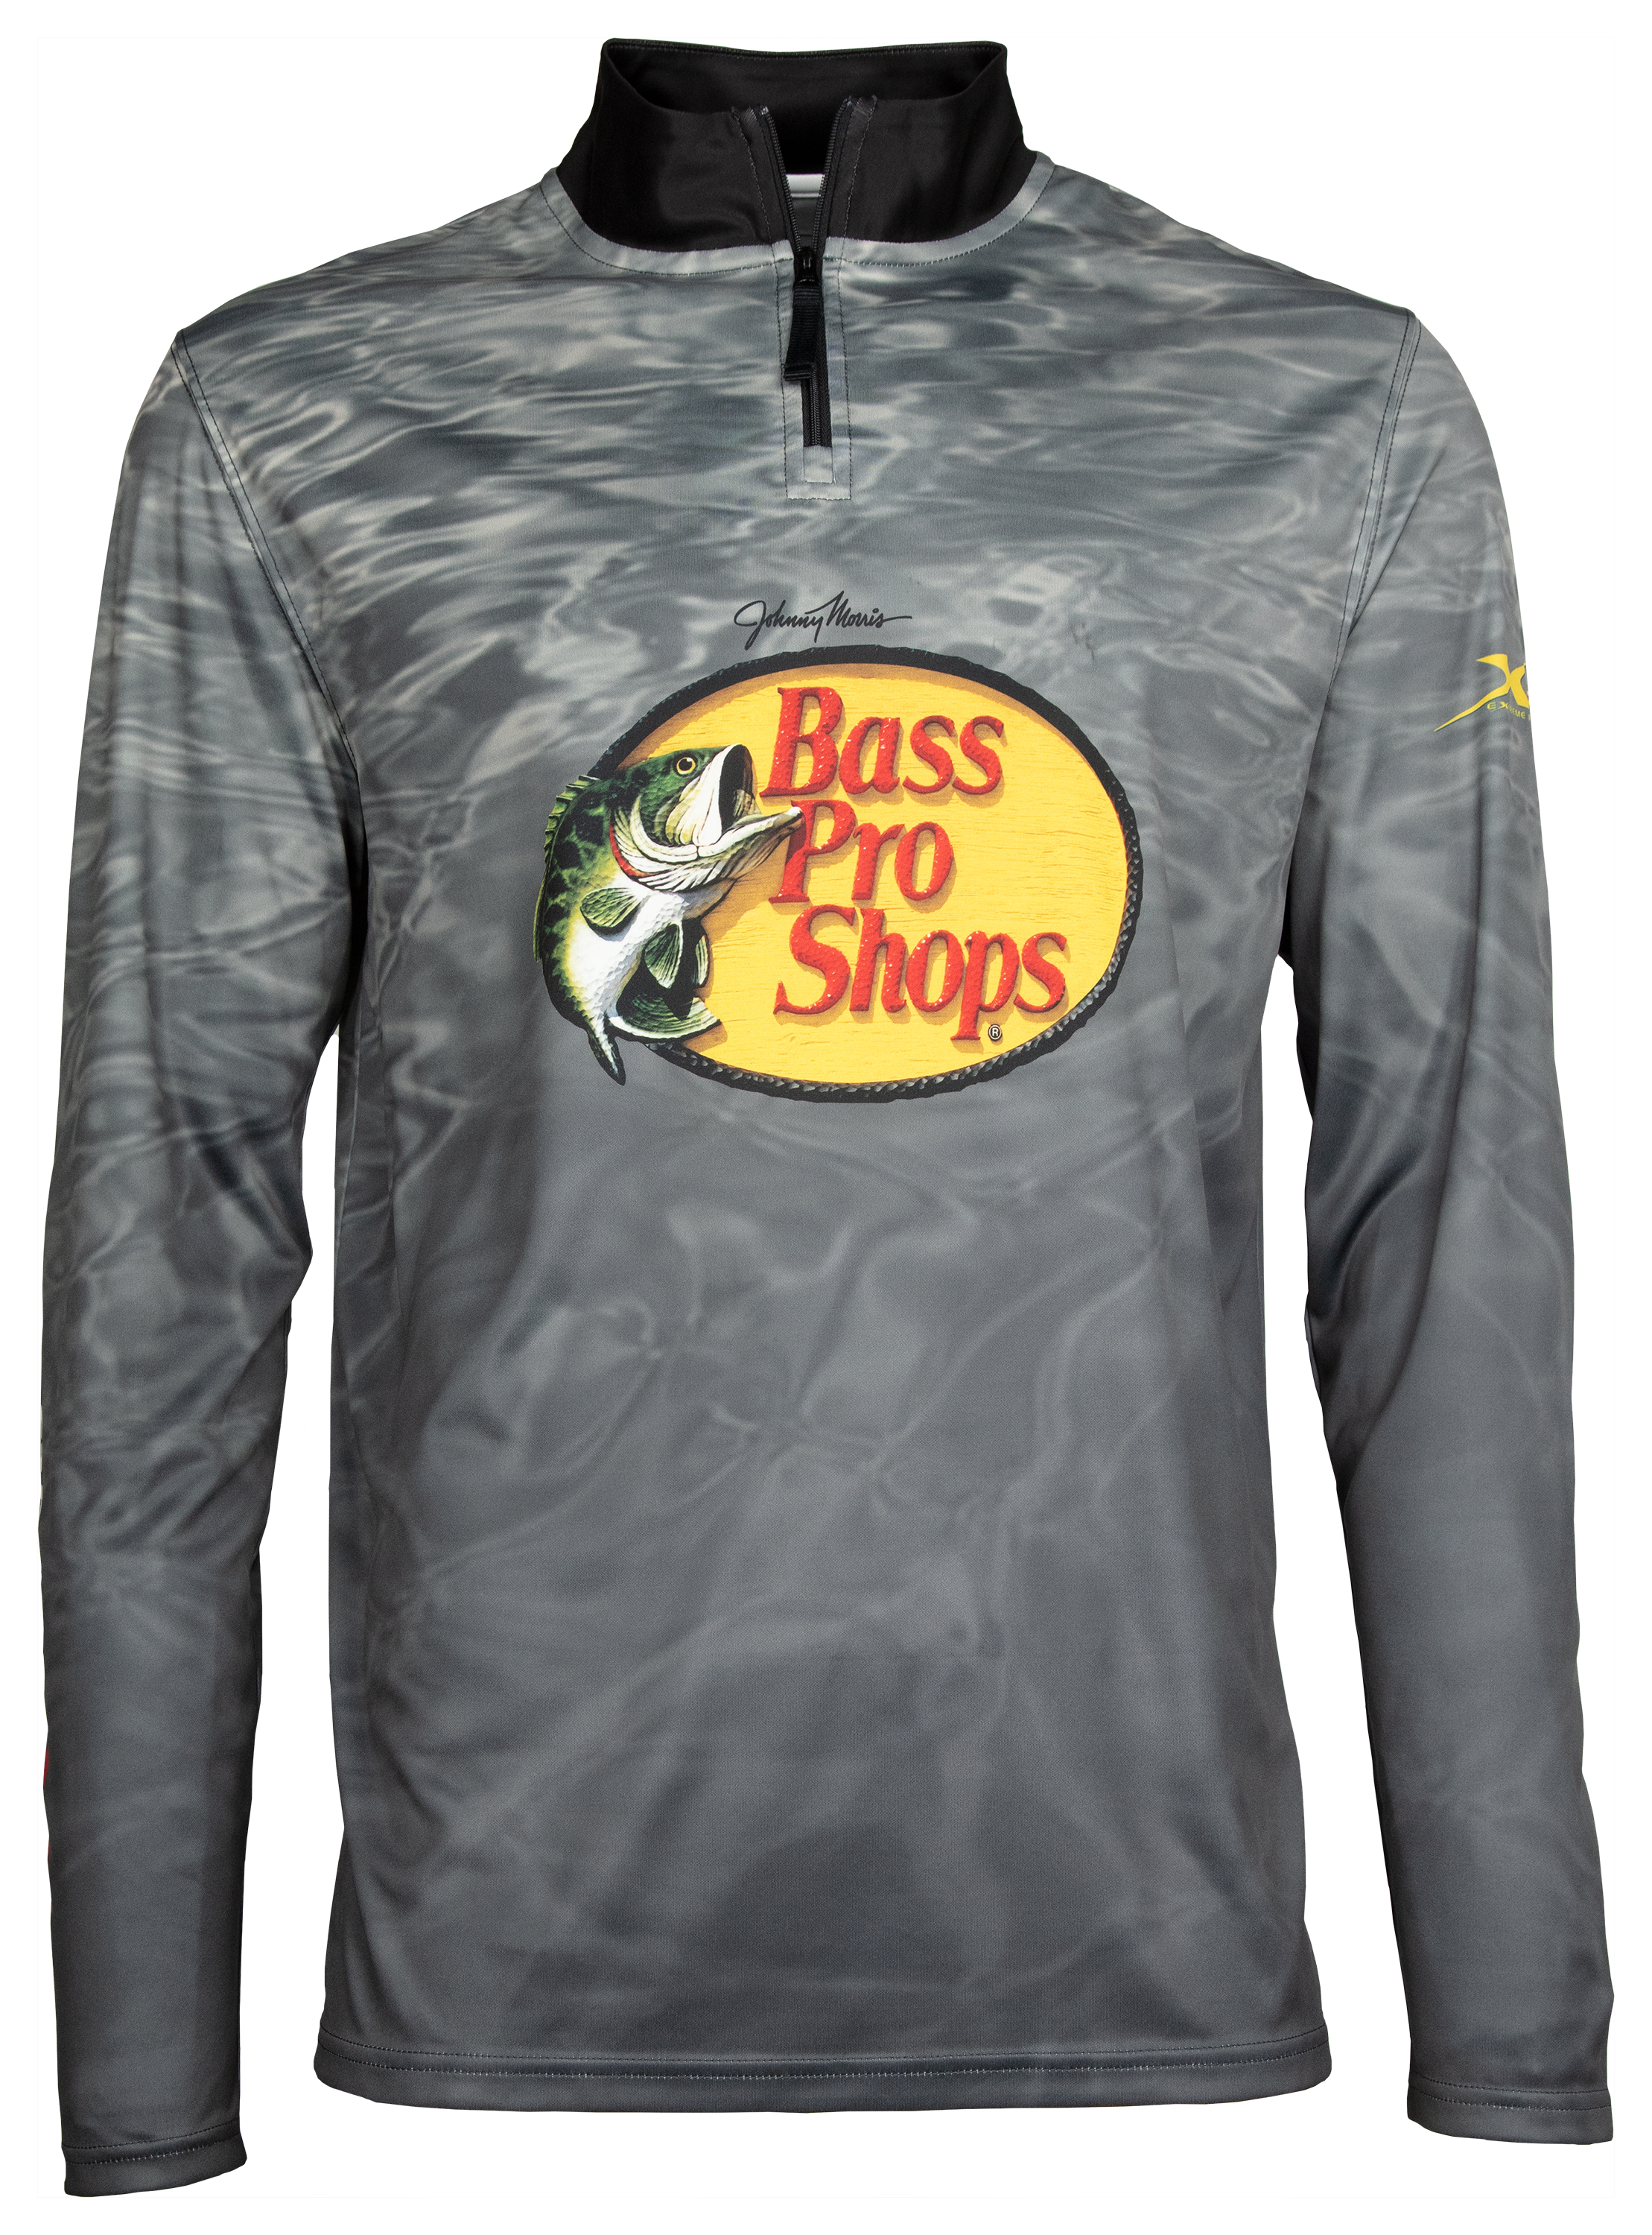 Bass Pro Shops Signature Series Long-Sleeve Performance Shirt for Men - Charcoal - L